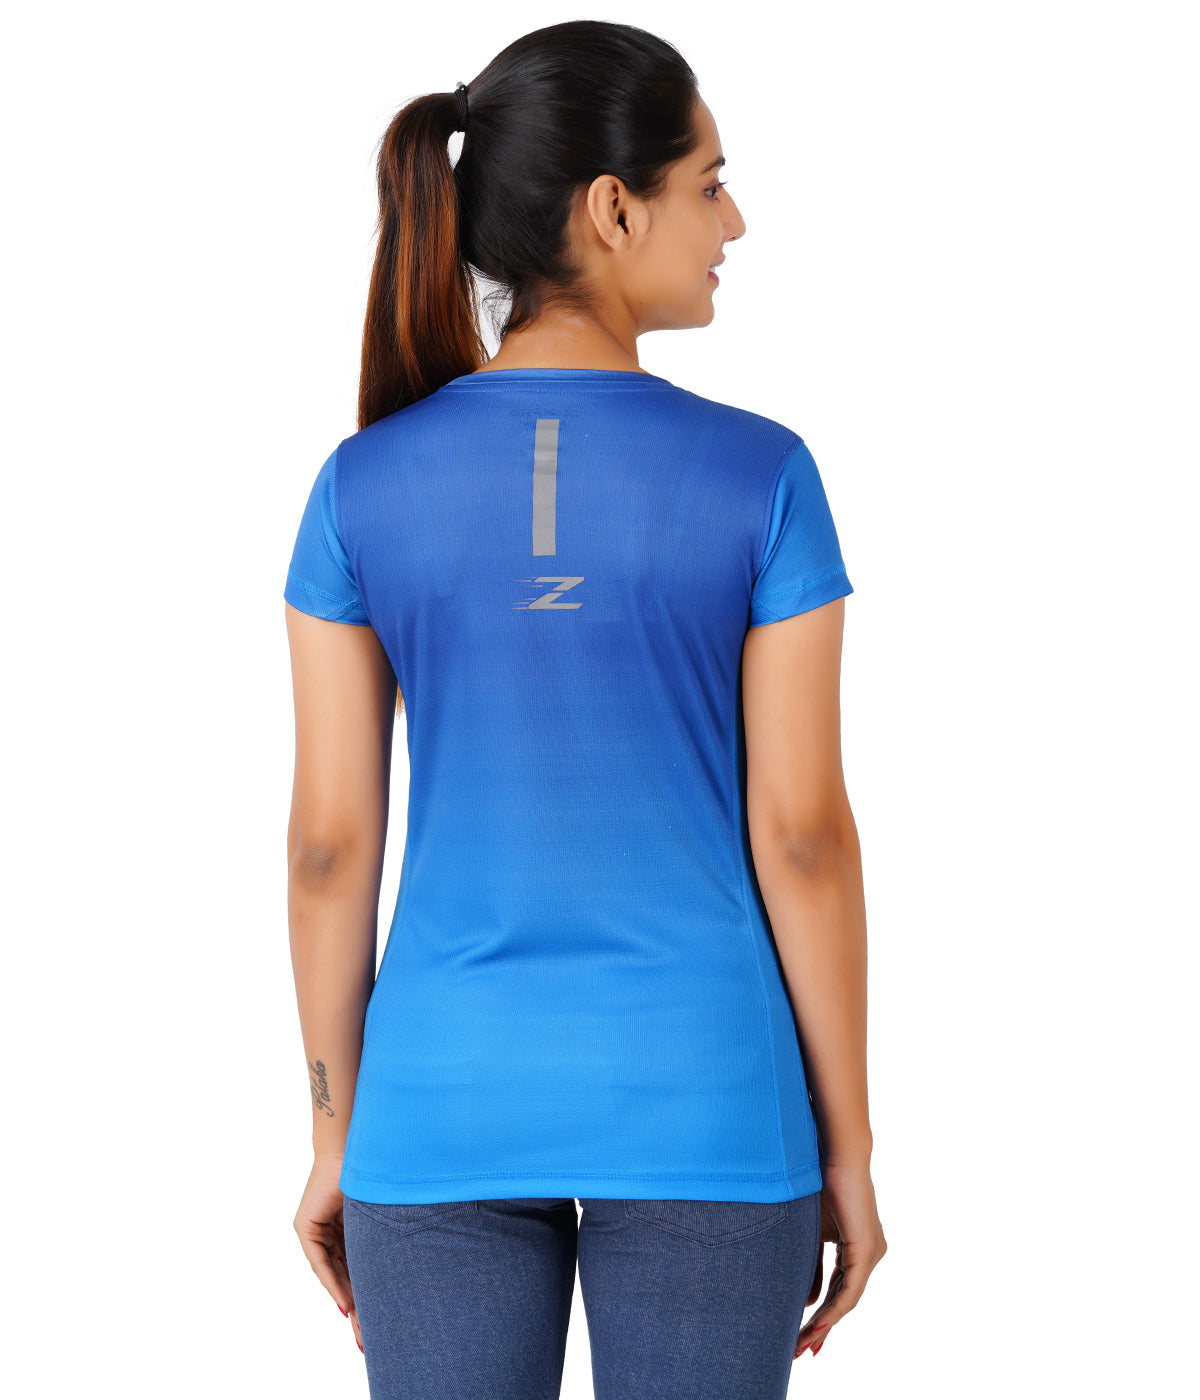 ZAKPRO Sports Tees for Women (Bluish Run) - Cyclop.in